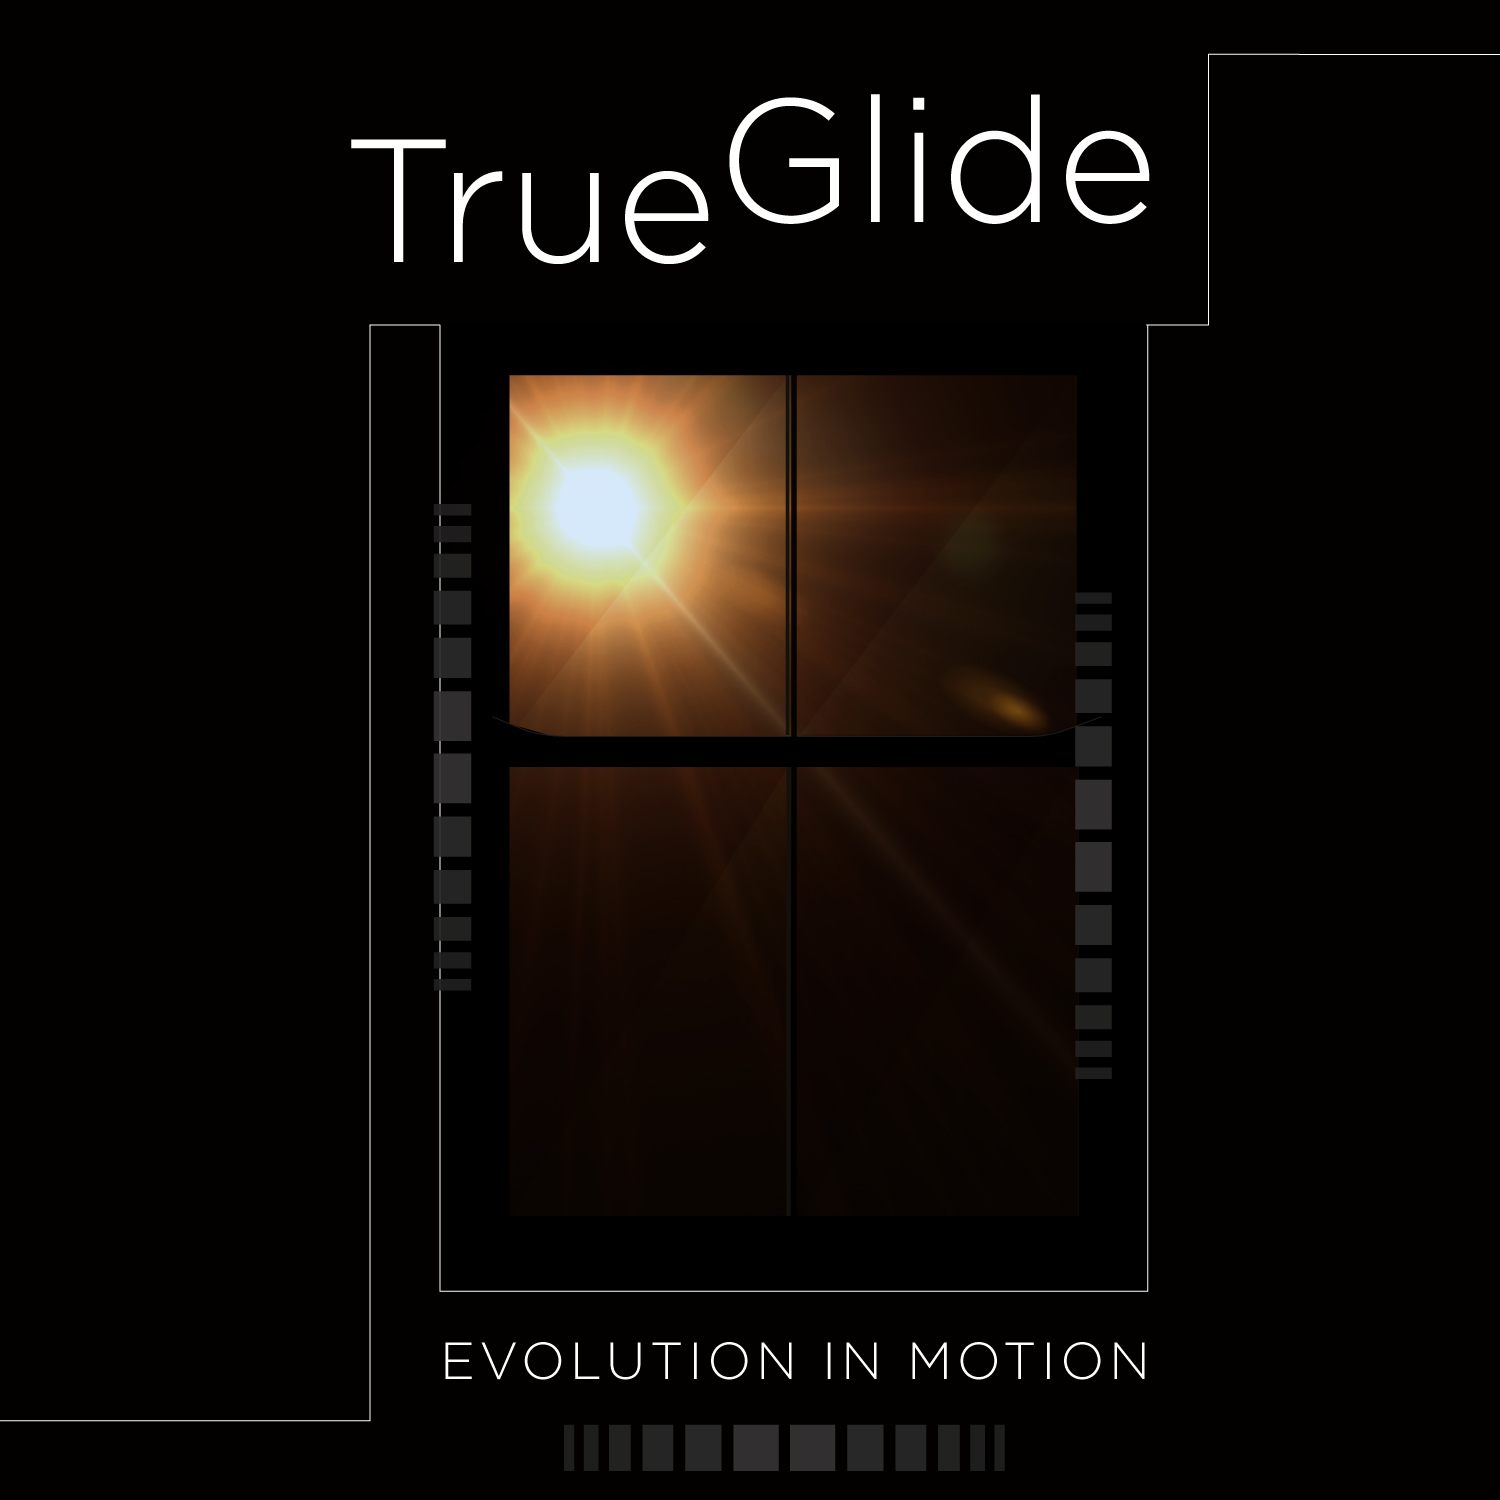 TrueGlide-Digtial-Assets-1500x1500px.jpg